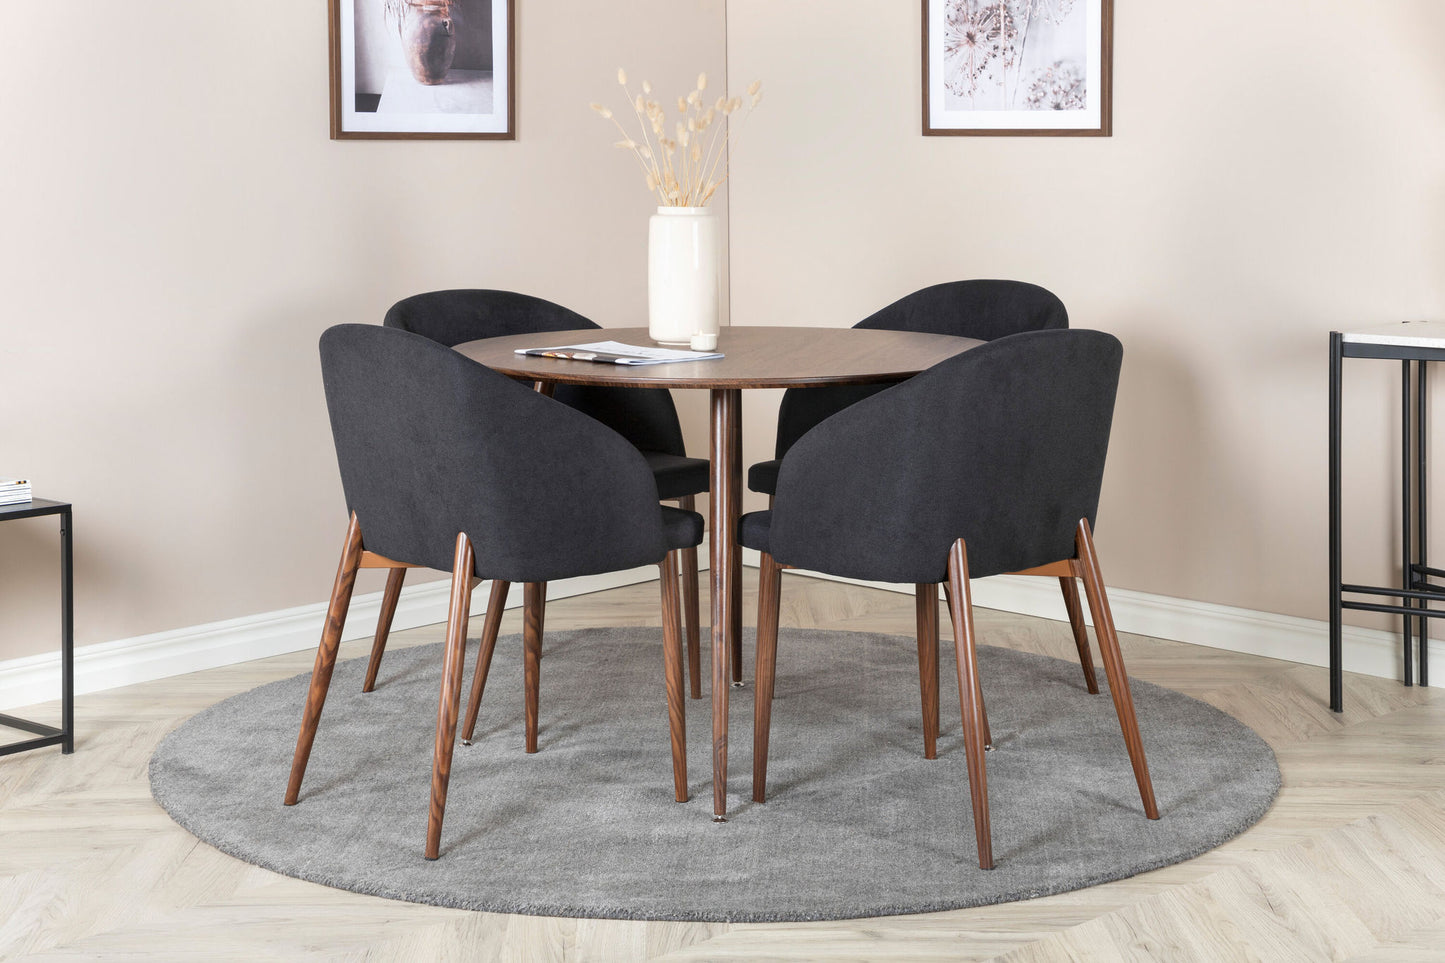 Plaza Rundt bord 100 cm - Valnød top - Valnød ben+Arch Spisebordsstol - Valnød ben - Sort Stof